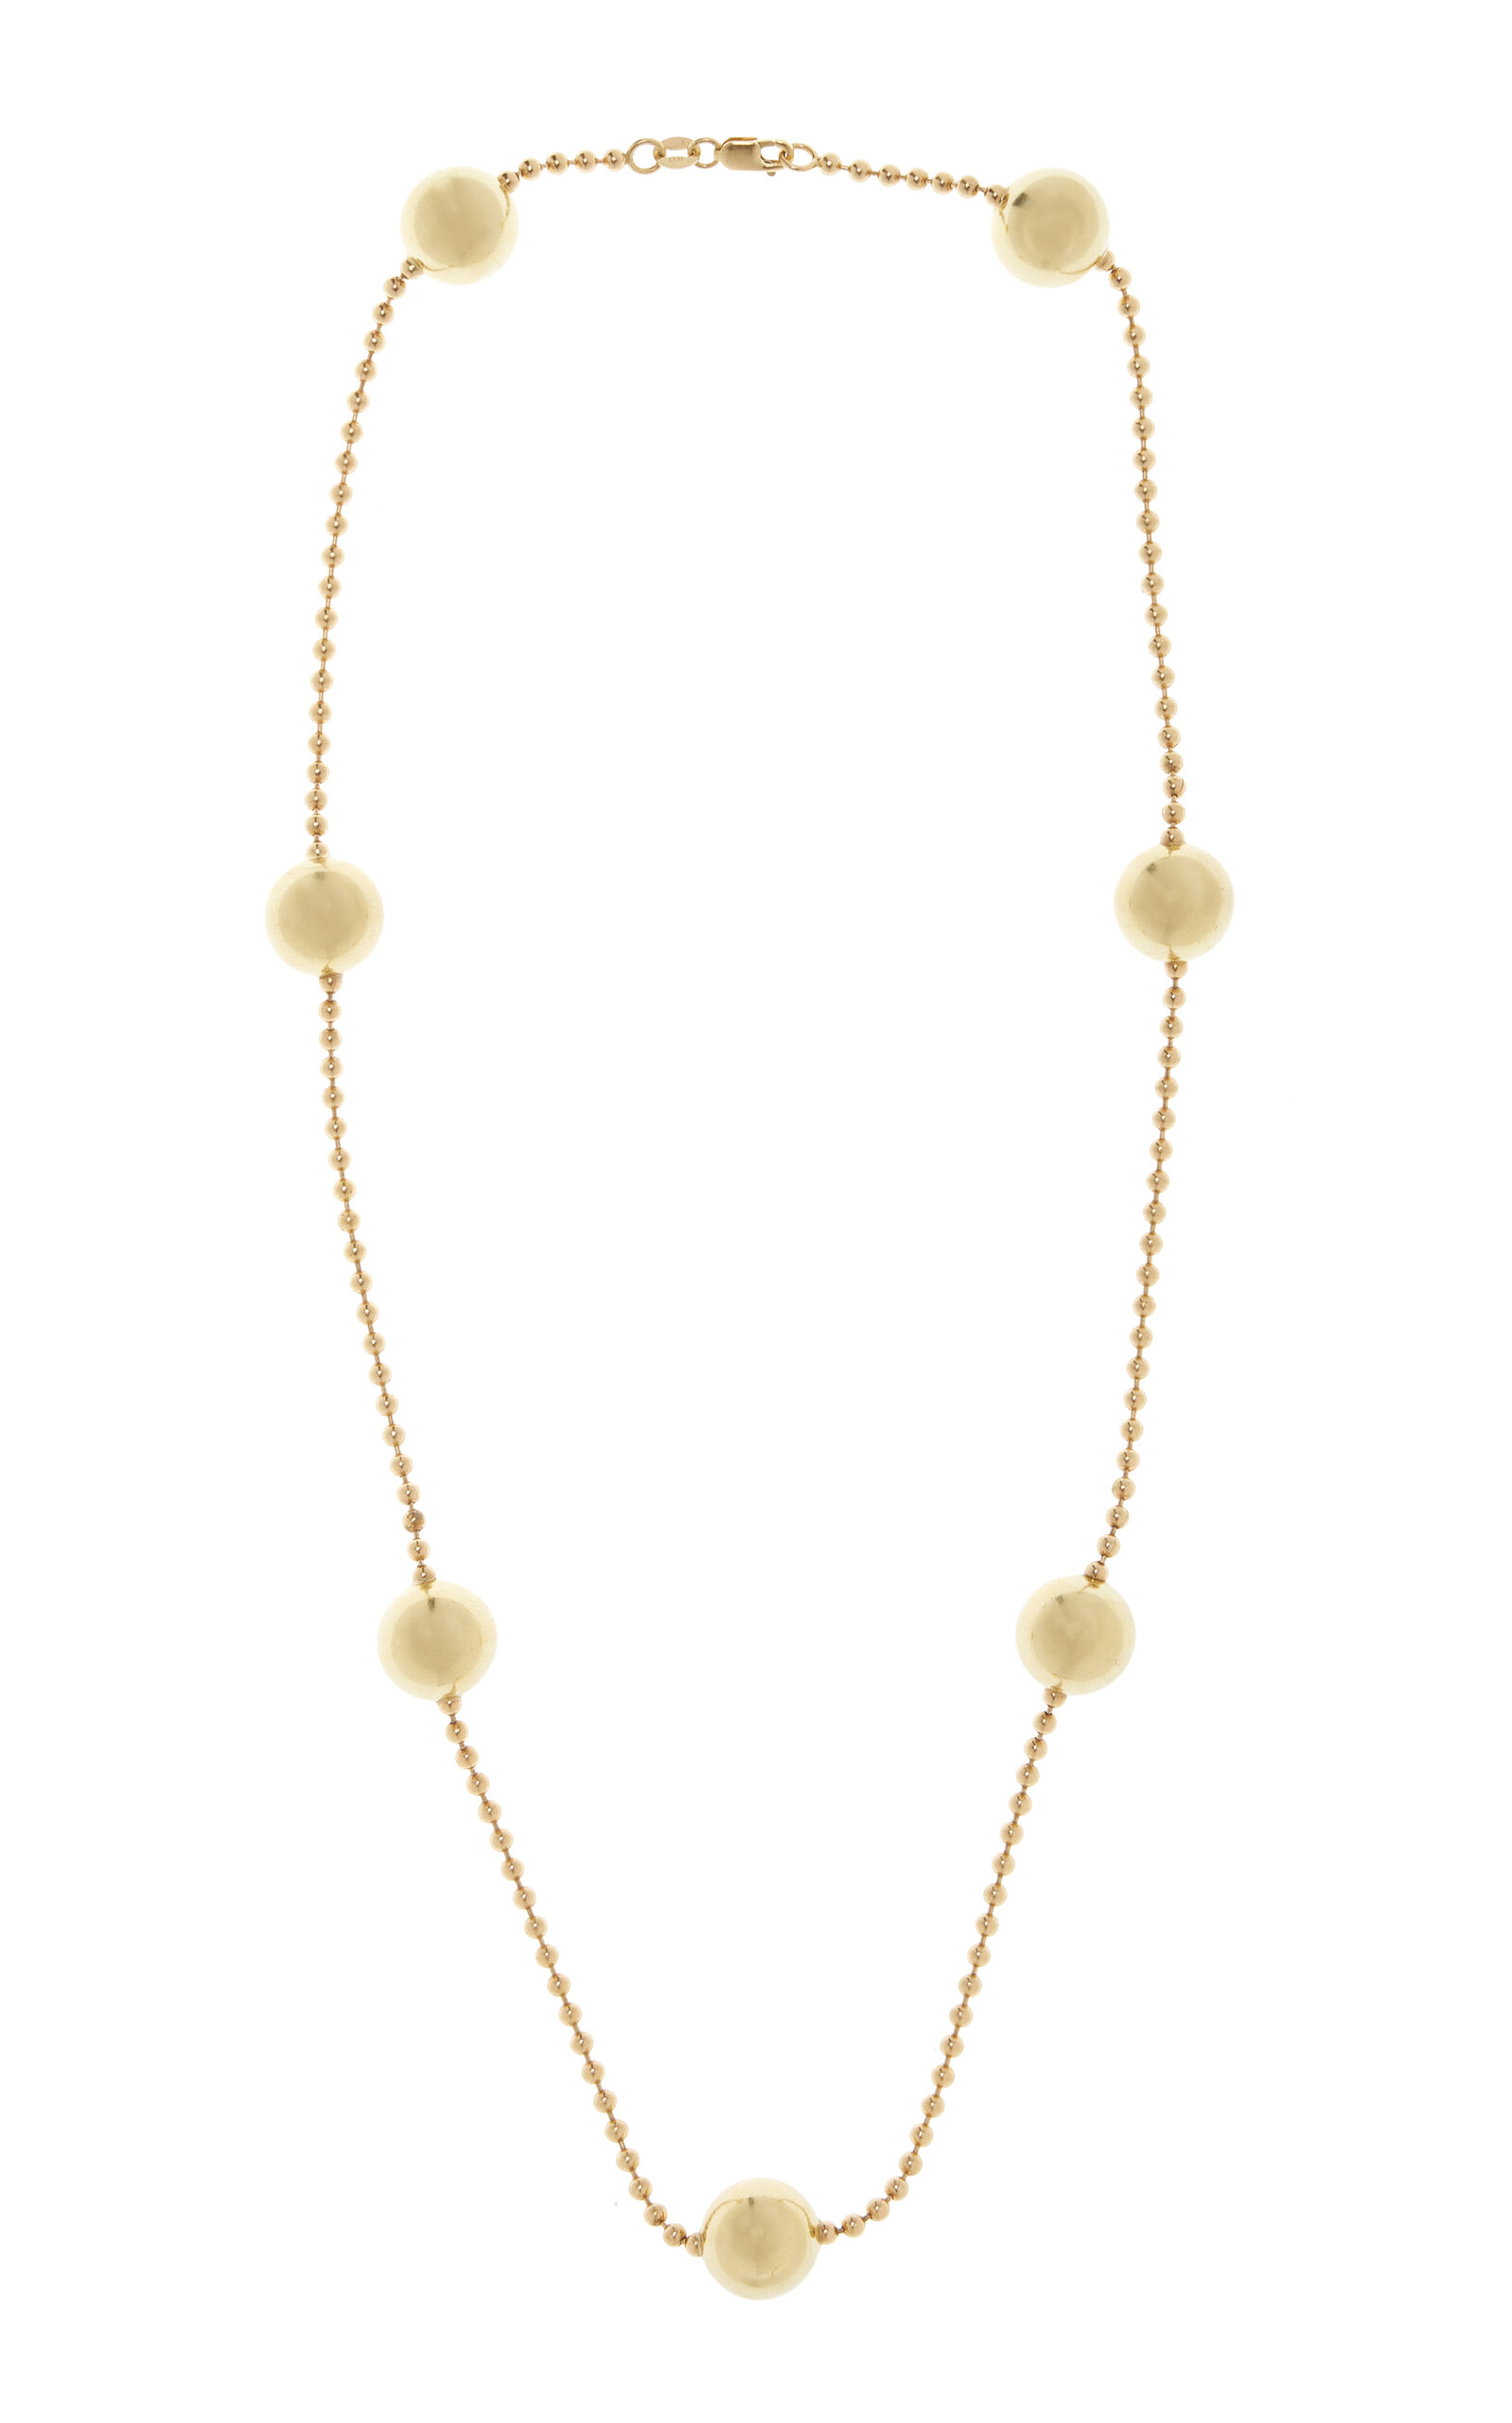 Jenna Blake 18k Gold Ball And Chain Necklace